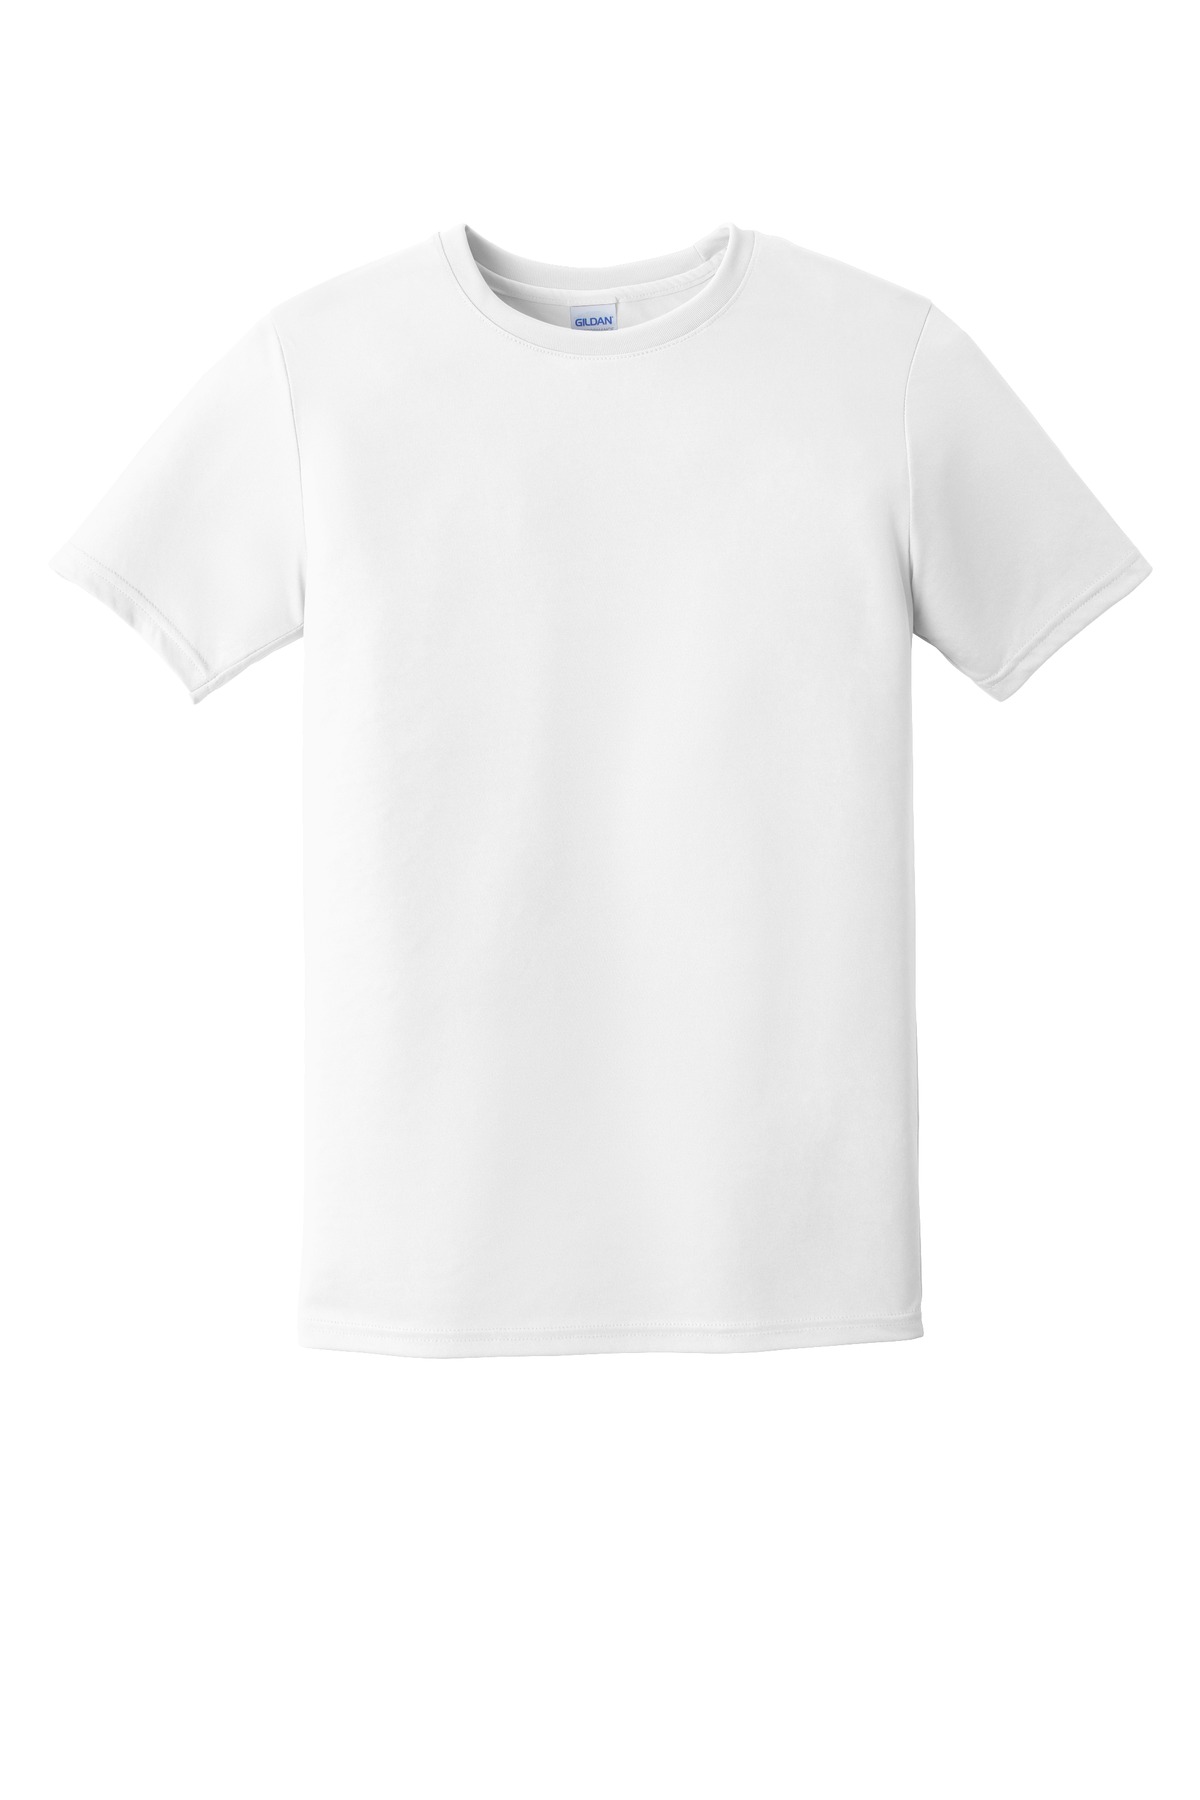 Gildan Performance ® Core T-Shirt. 46000 Questions & Answers